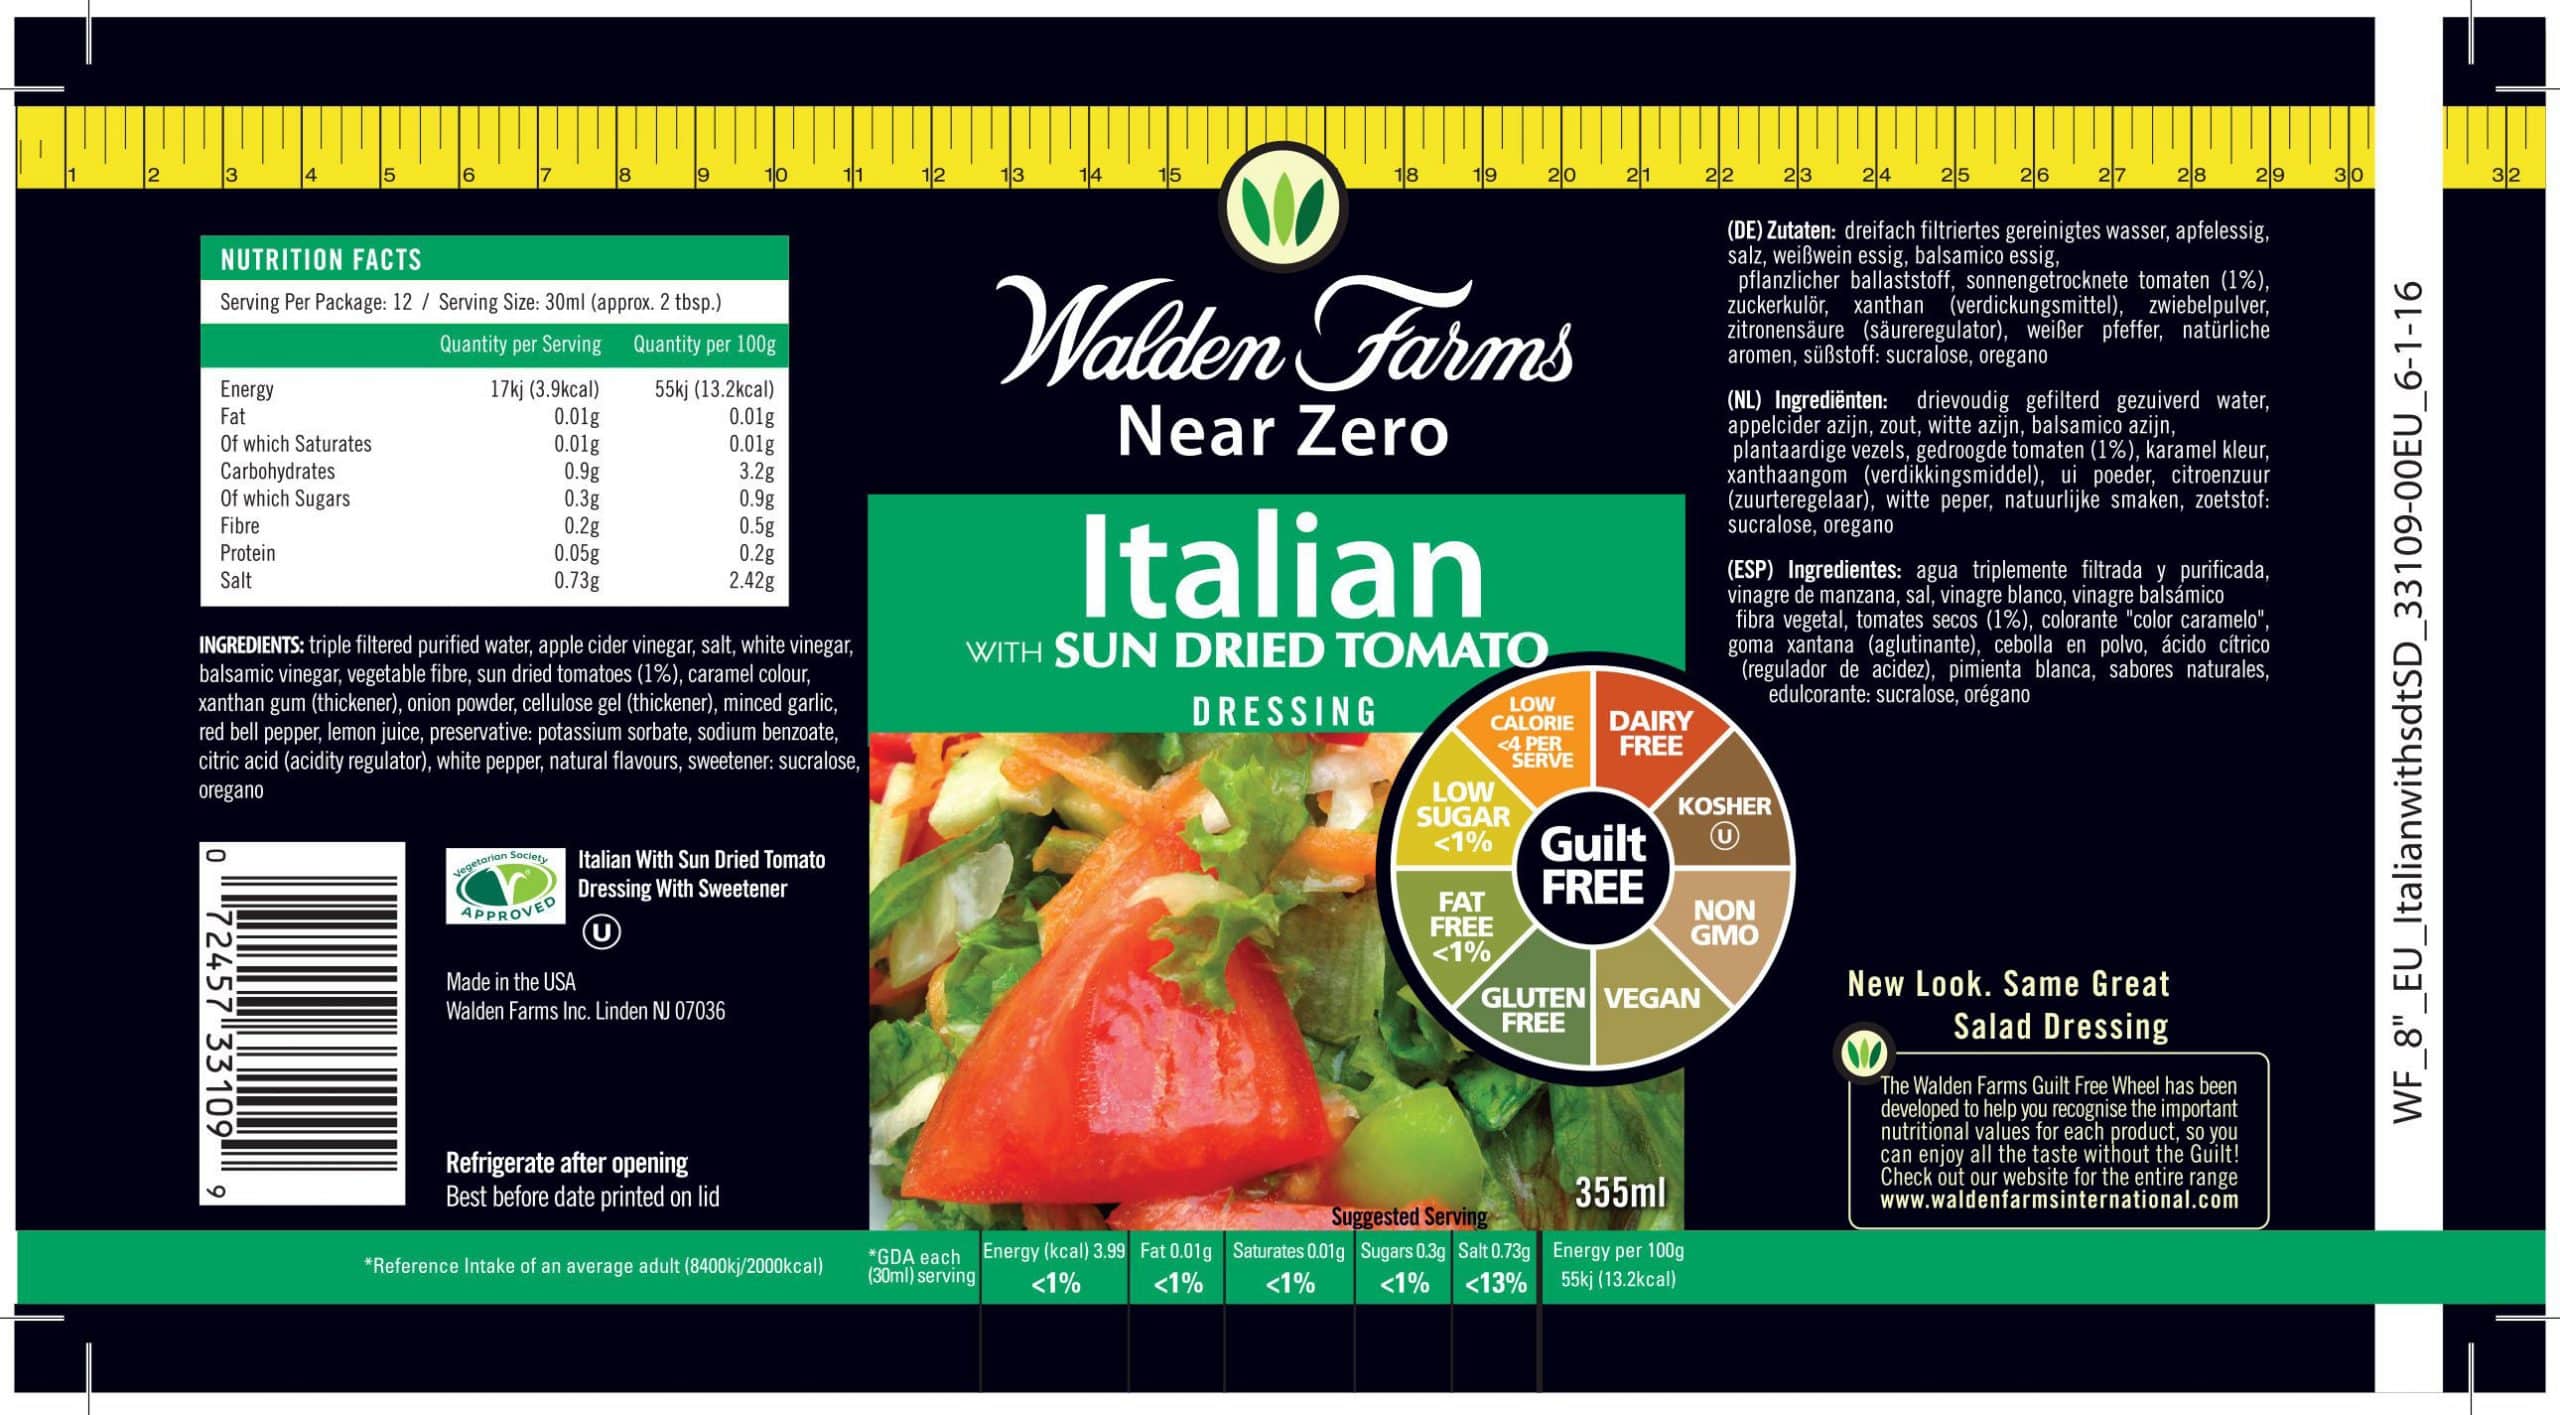 Walden farms Near Zero Italian WITH SUN DRIED TOMATO DRESSING Guilt FREE full label